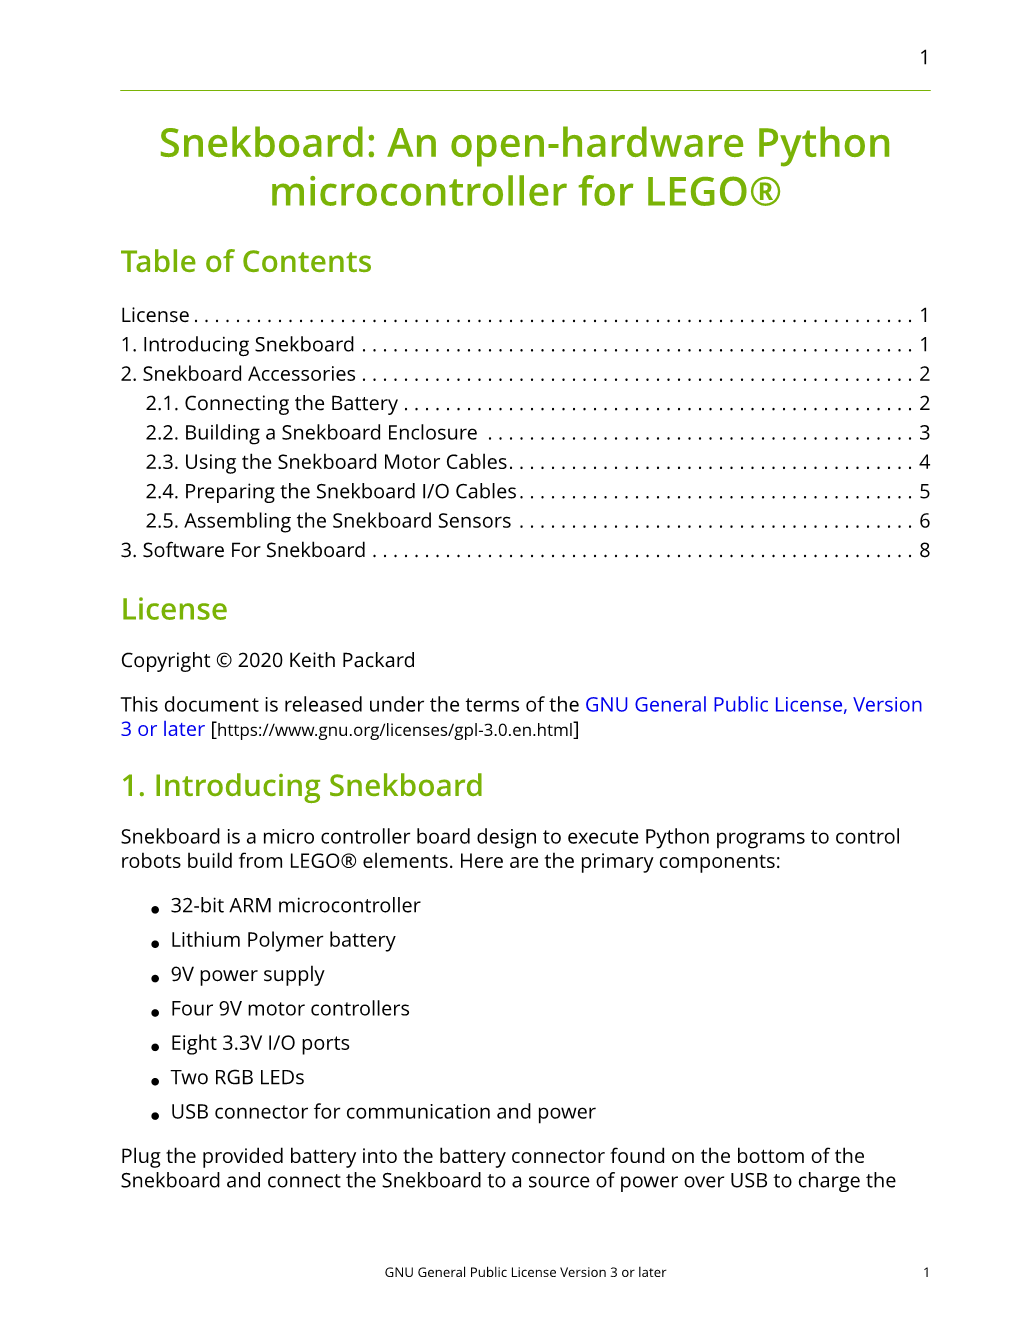 Snekboard: an Open-Hardware Python Microcontroller for LEGO®